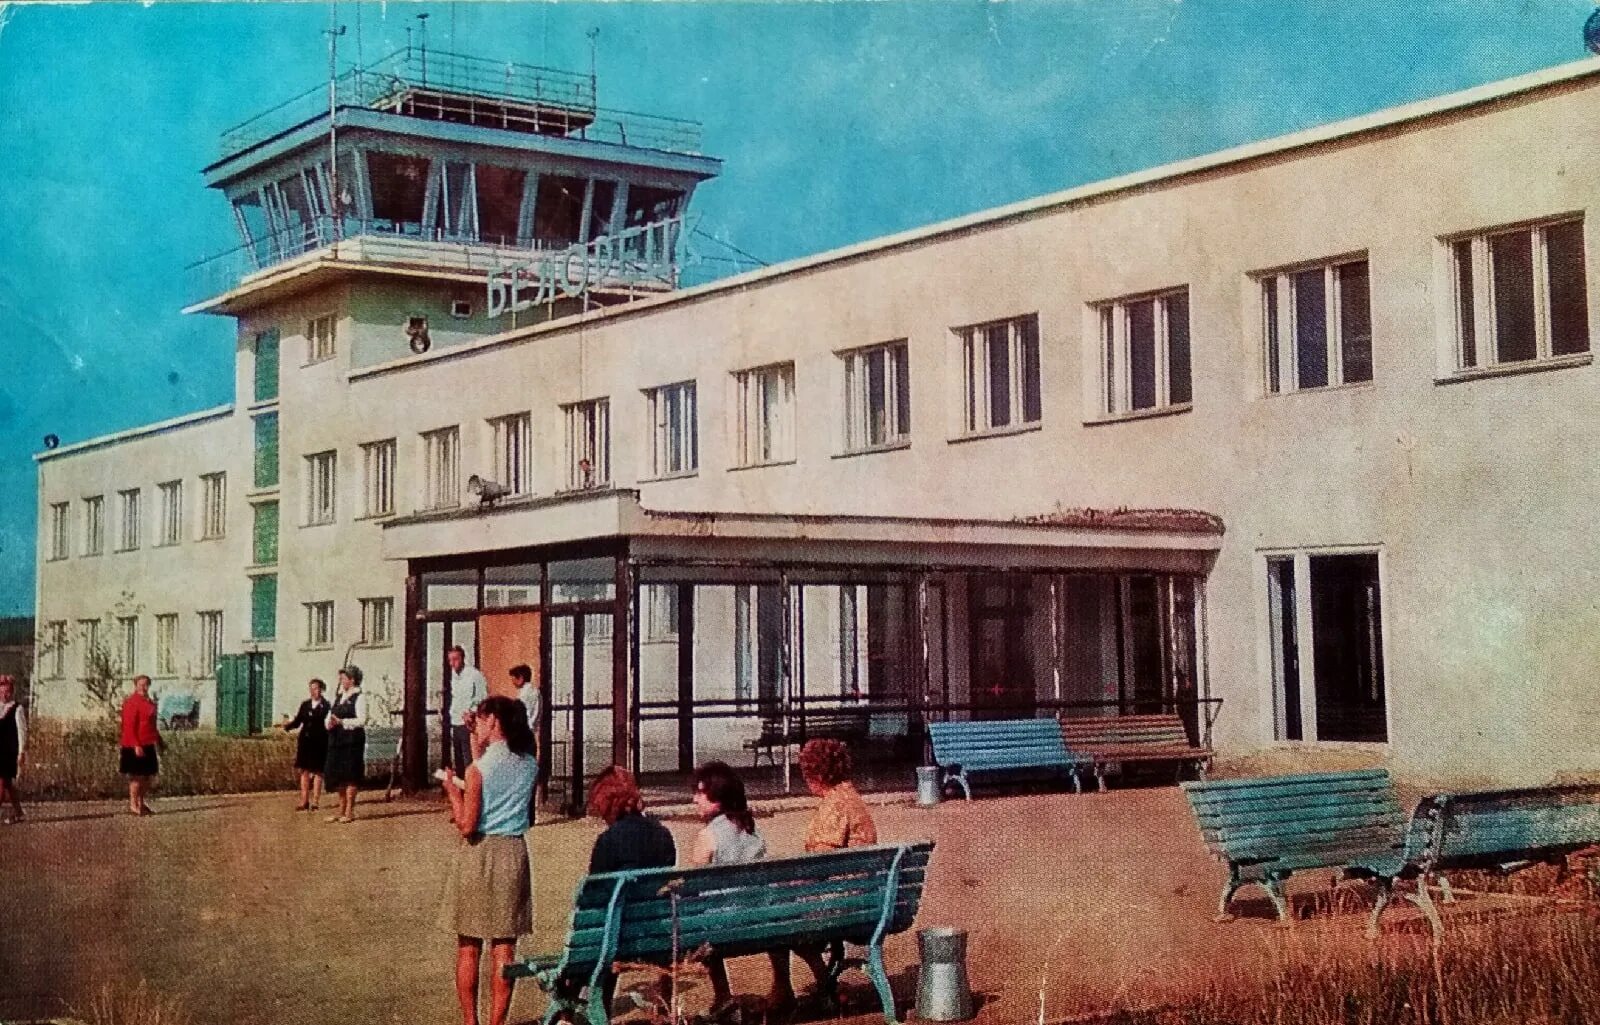 Аэропорт города Белорецк. Старый аэропорт Белорецк. Заброшенный аэропорт Белорецк. Аэродром Белорецк Башкирия.